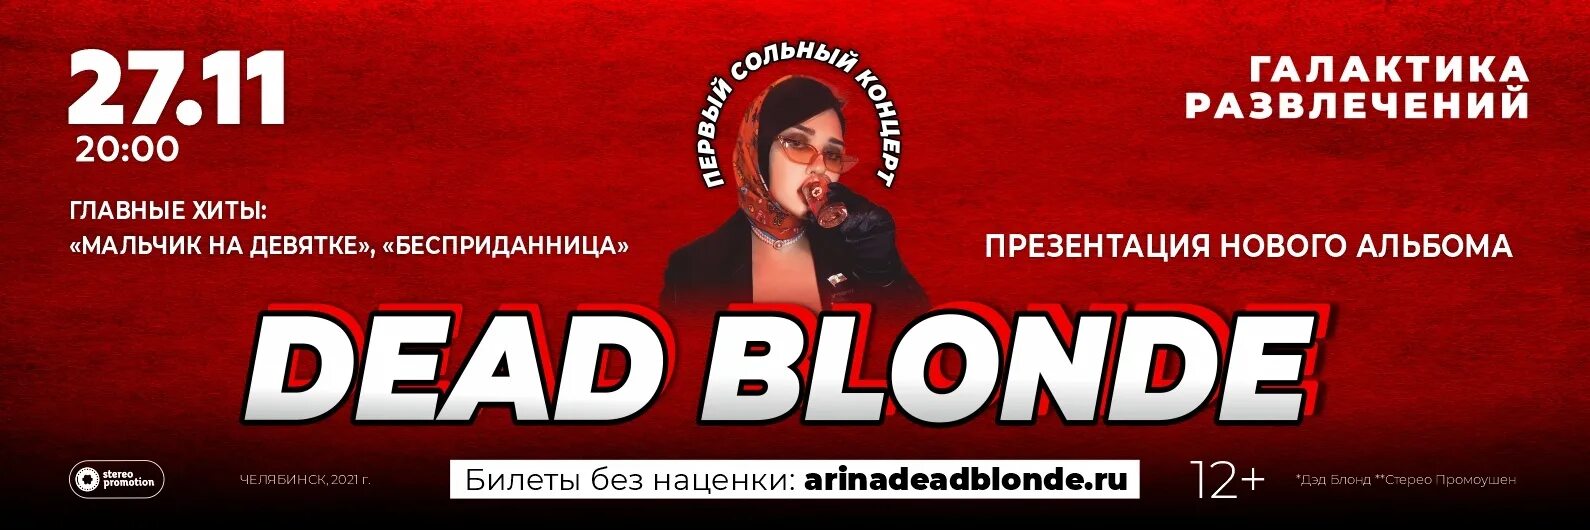 Dead blonde билеты. Dead blonde Архангельск.